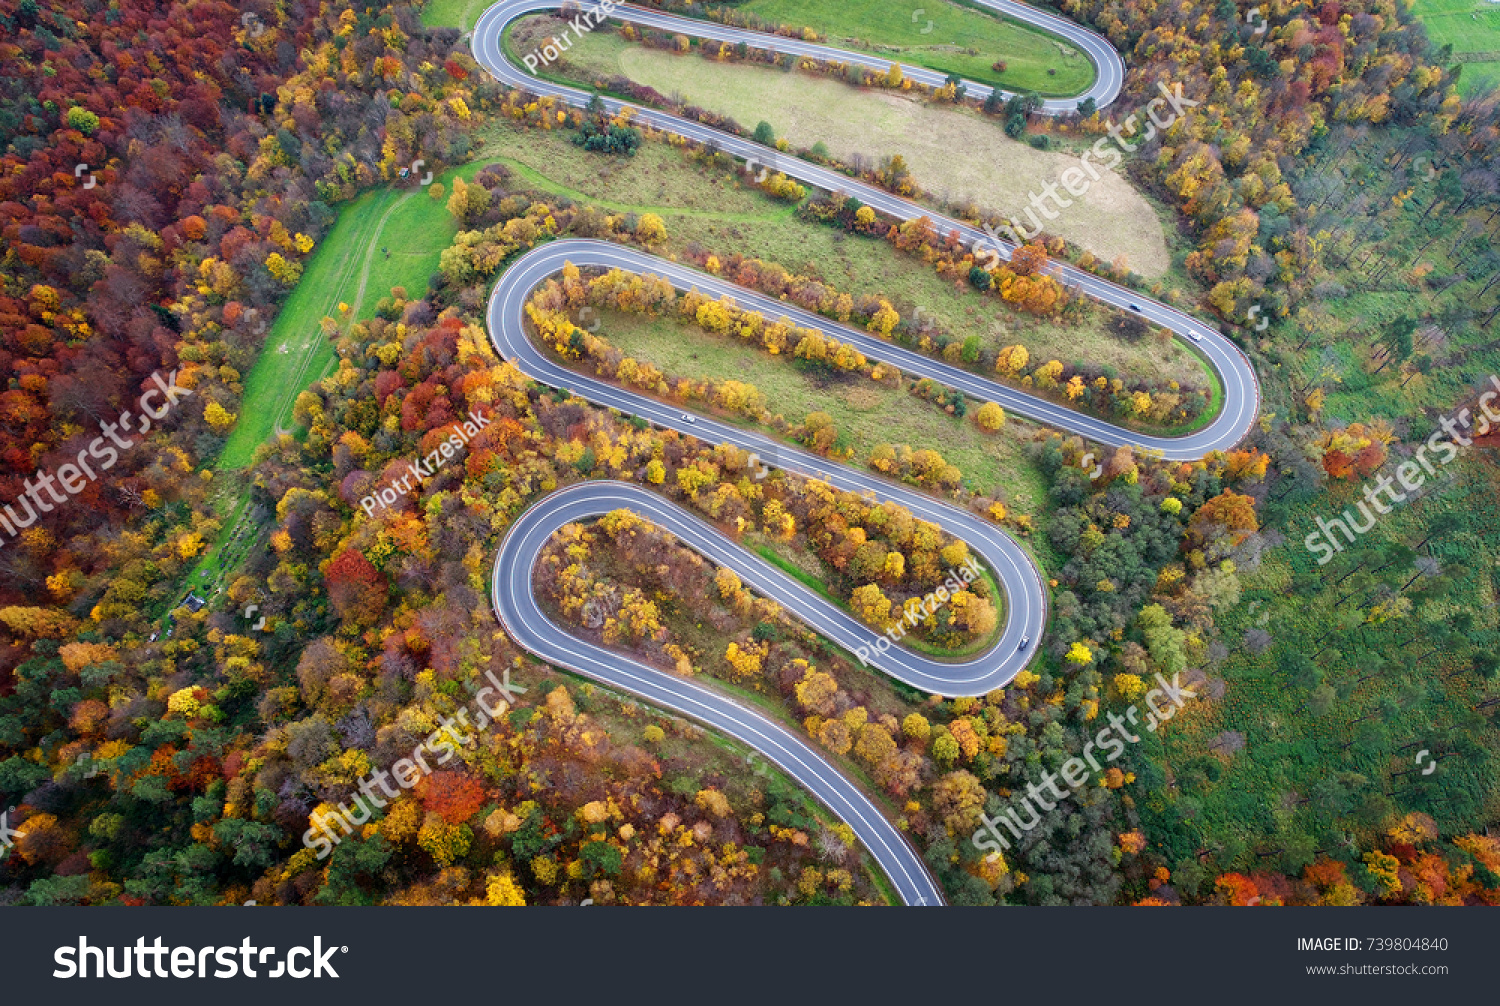 Road in autumn scenery - aerial shot #739804840